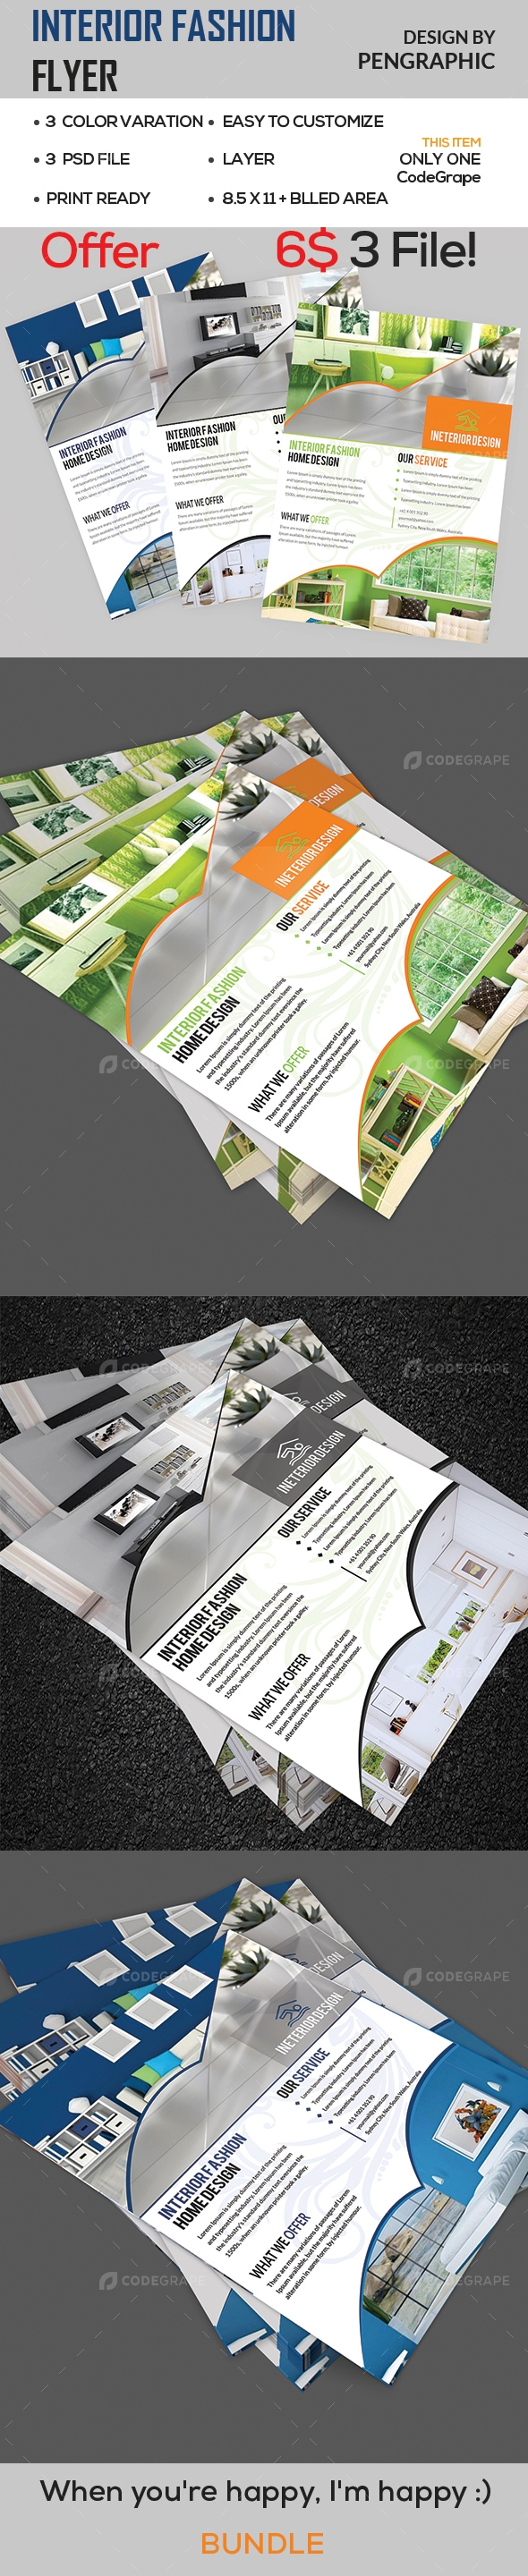 Interior Design Flyer Template - Prints | CodeGrape